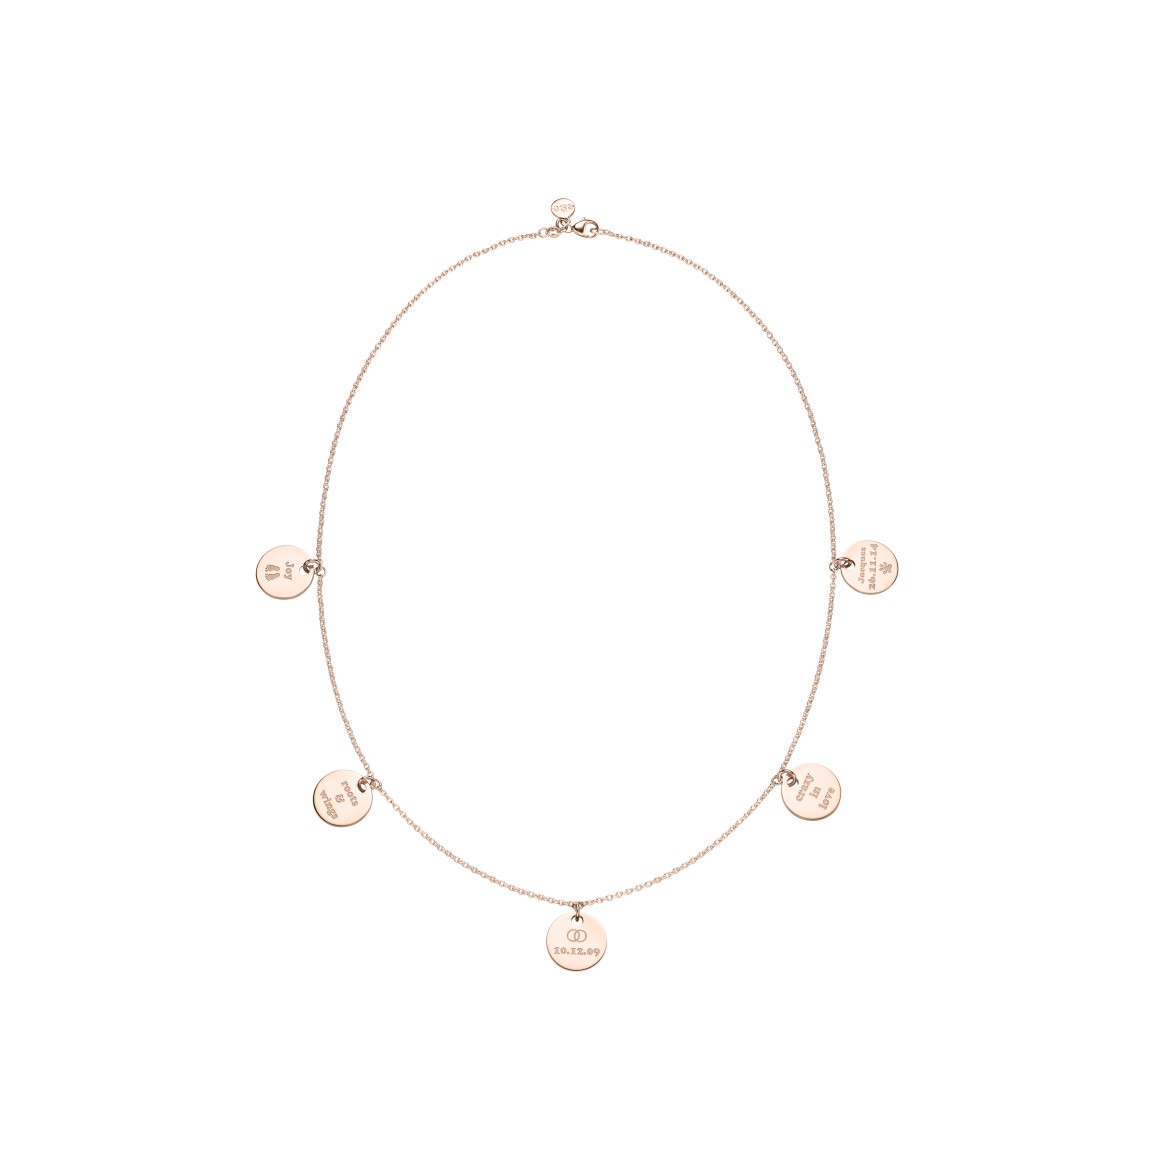 delicate family necklace 18 karat rose gold